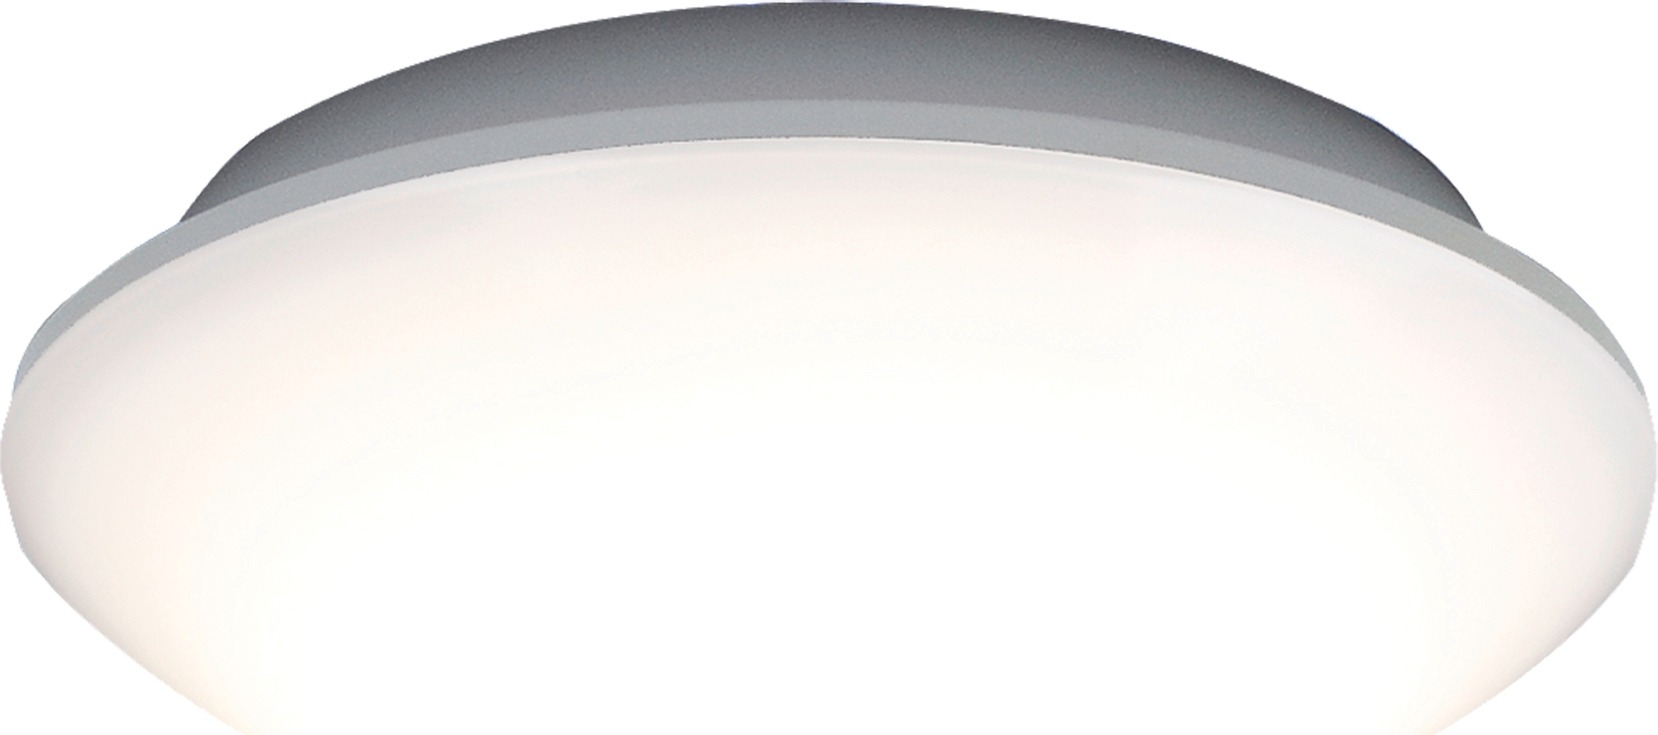 LED-kattovalaisin Muller Licht Prisma, T8, 2x10W, IP20, 627x164x59mm, metalli/akryyli, valkoinen